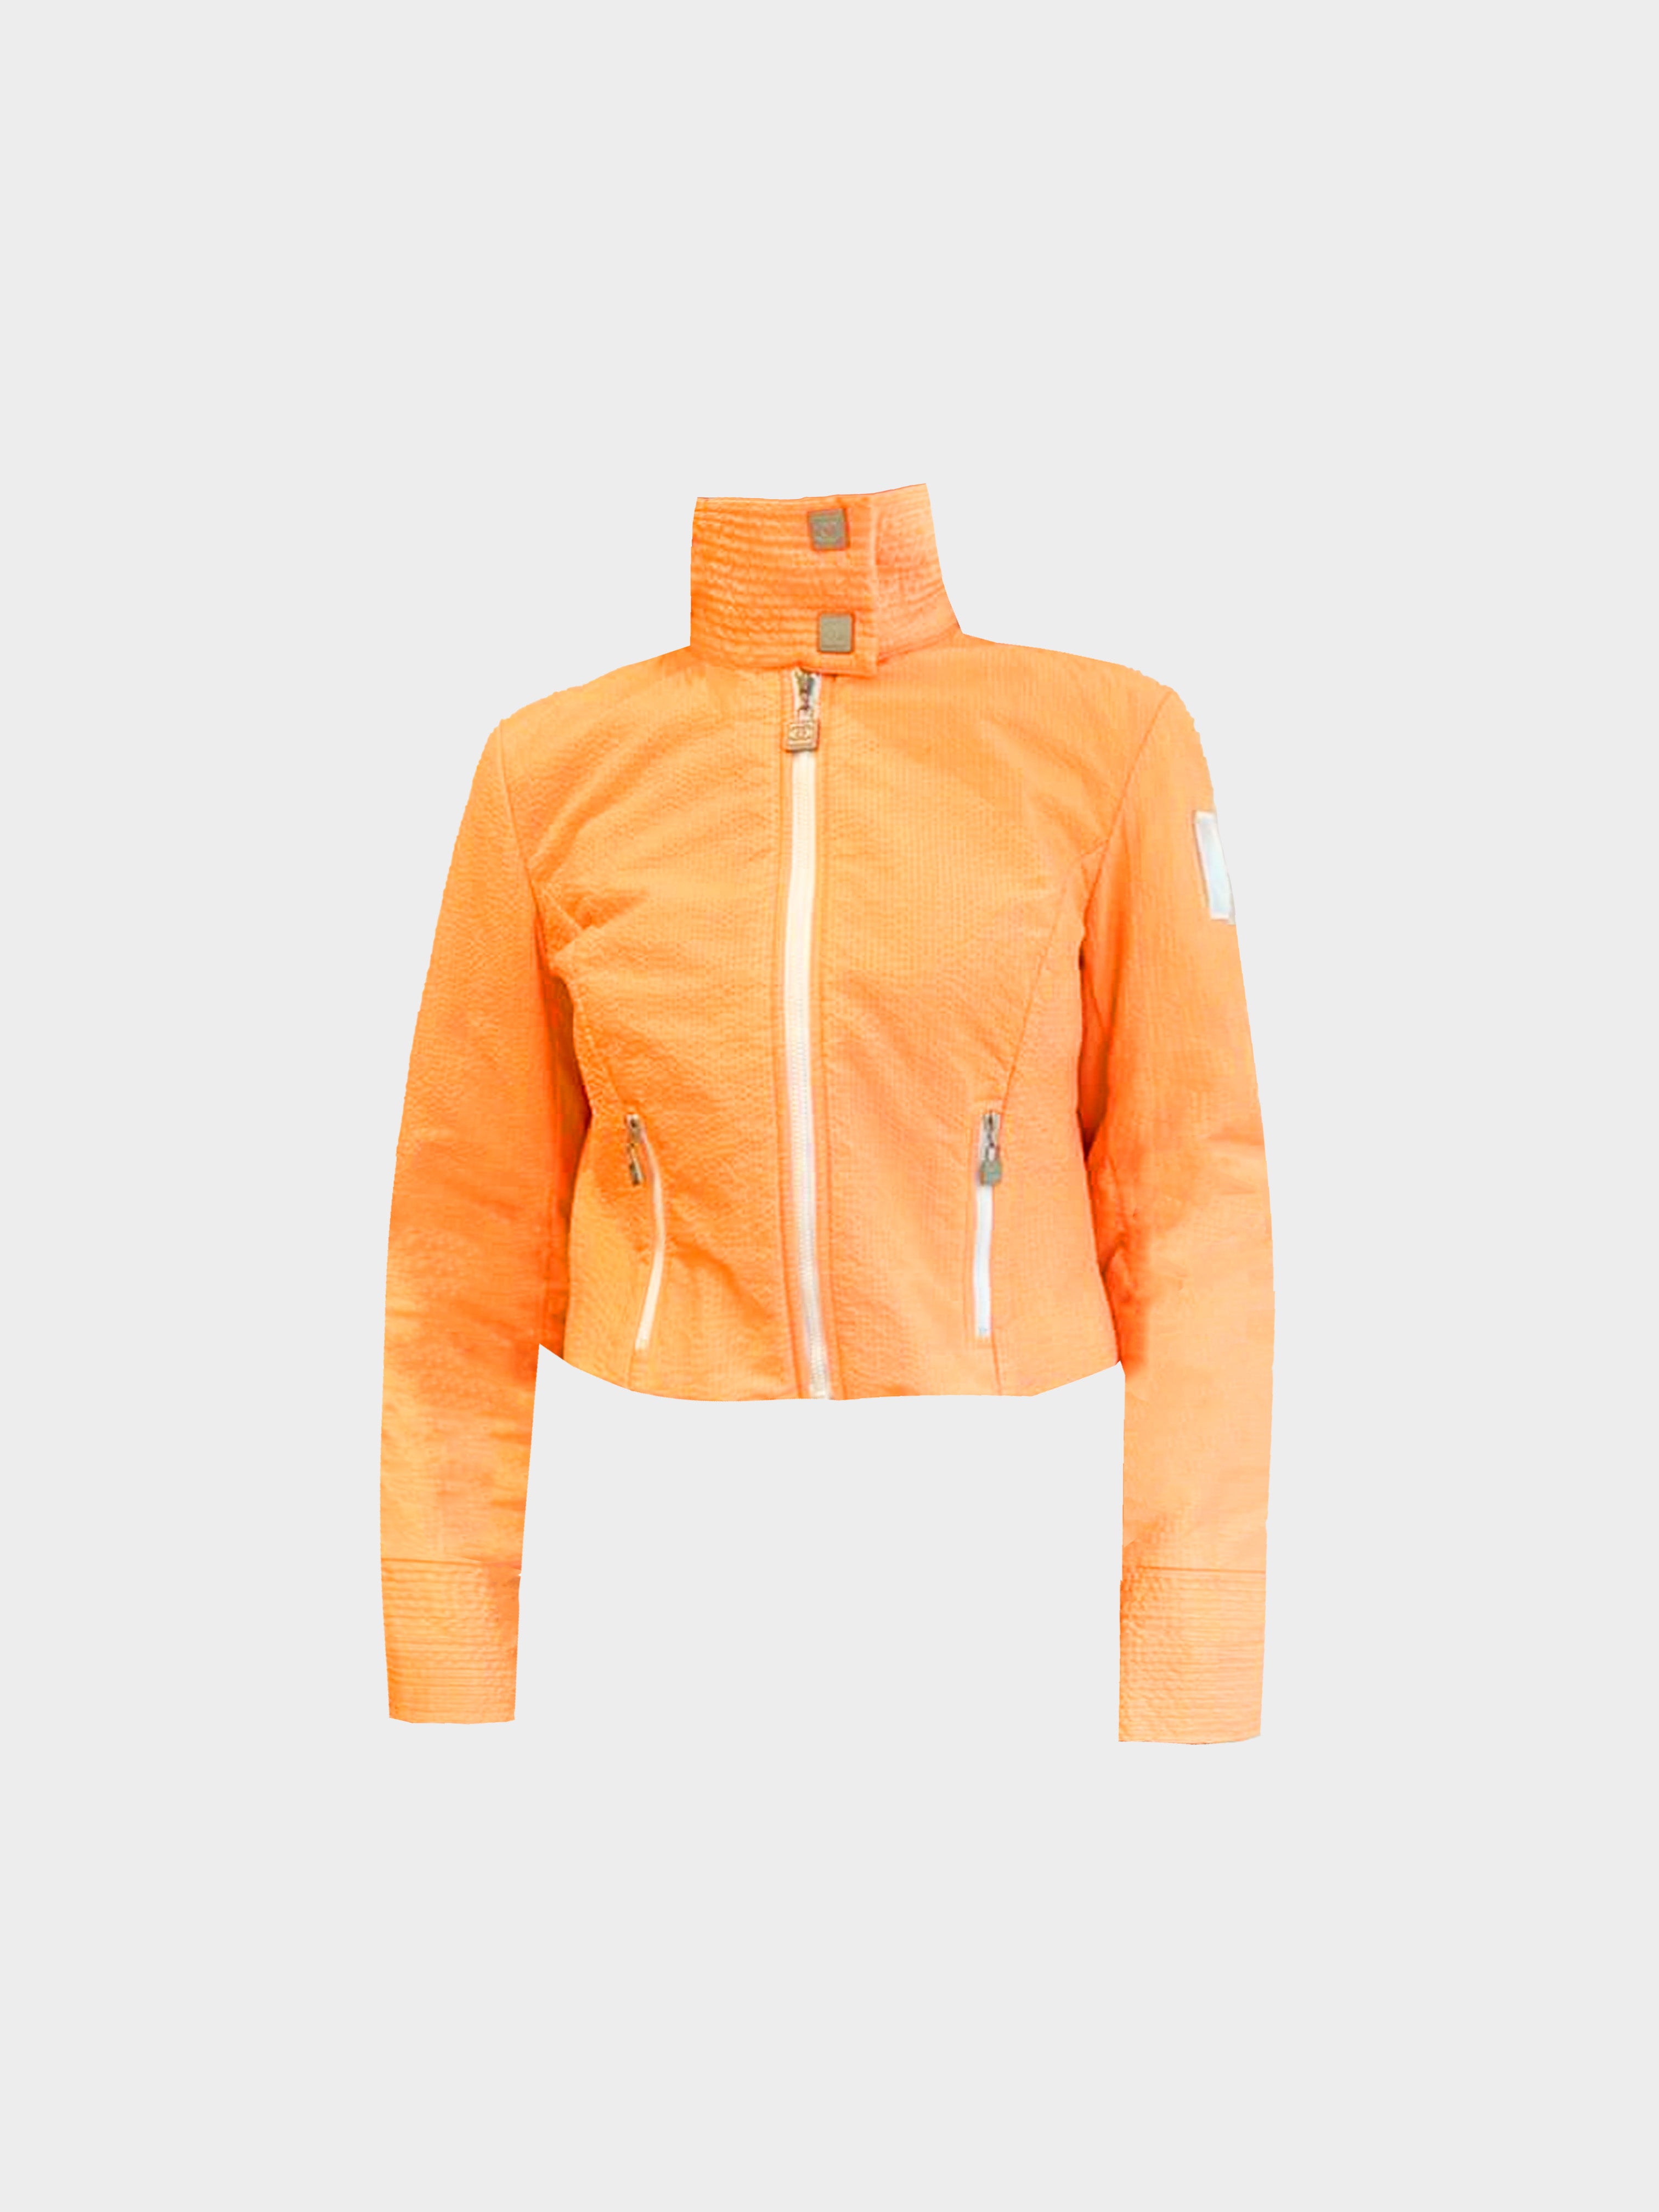 Chanel Sport 2004 CC Orange Jacket